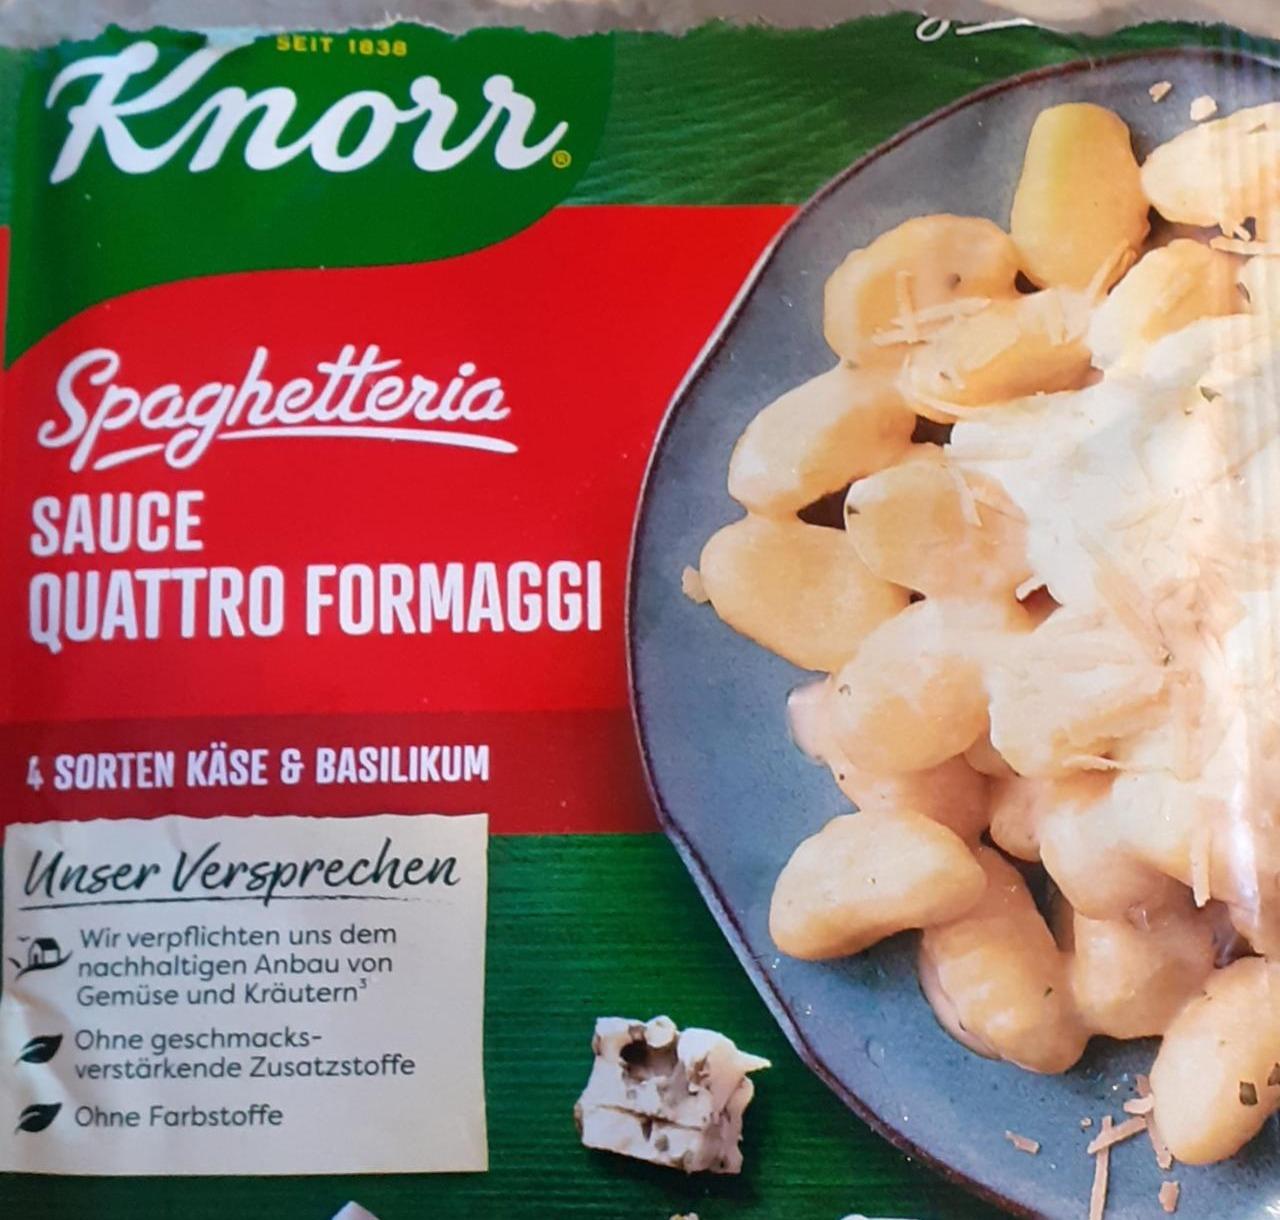 Fotografie - Spaghetteria Quattro Formaggi 4 Sorten Käse & Basilikum Knorr